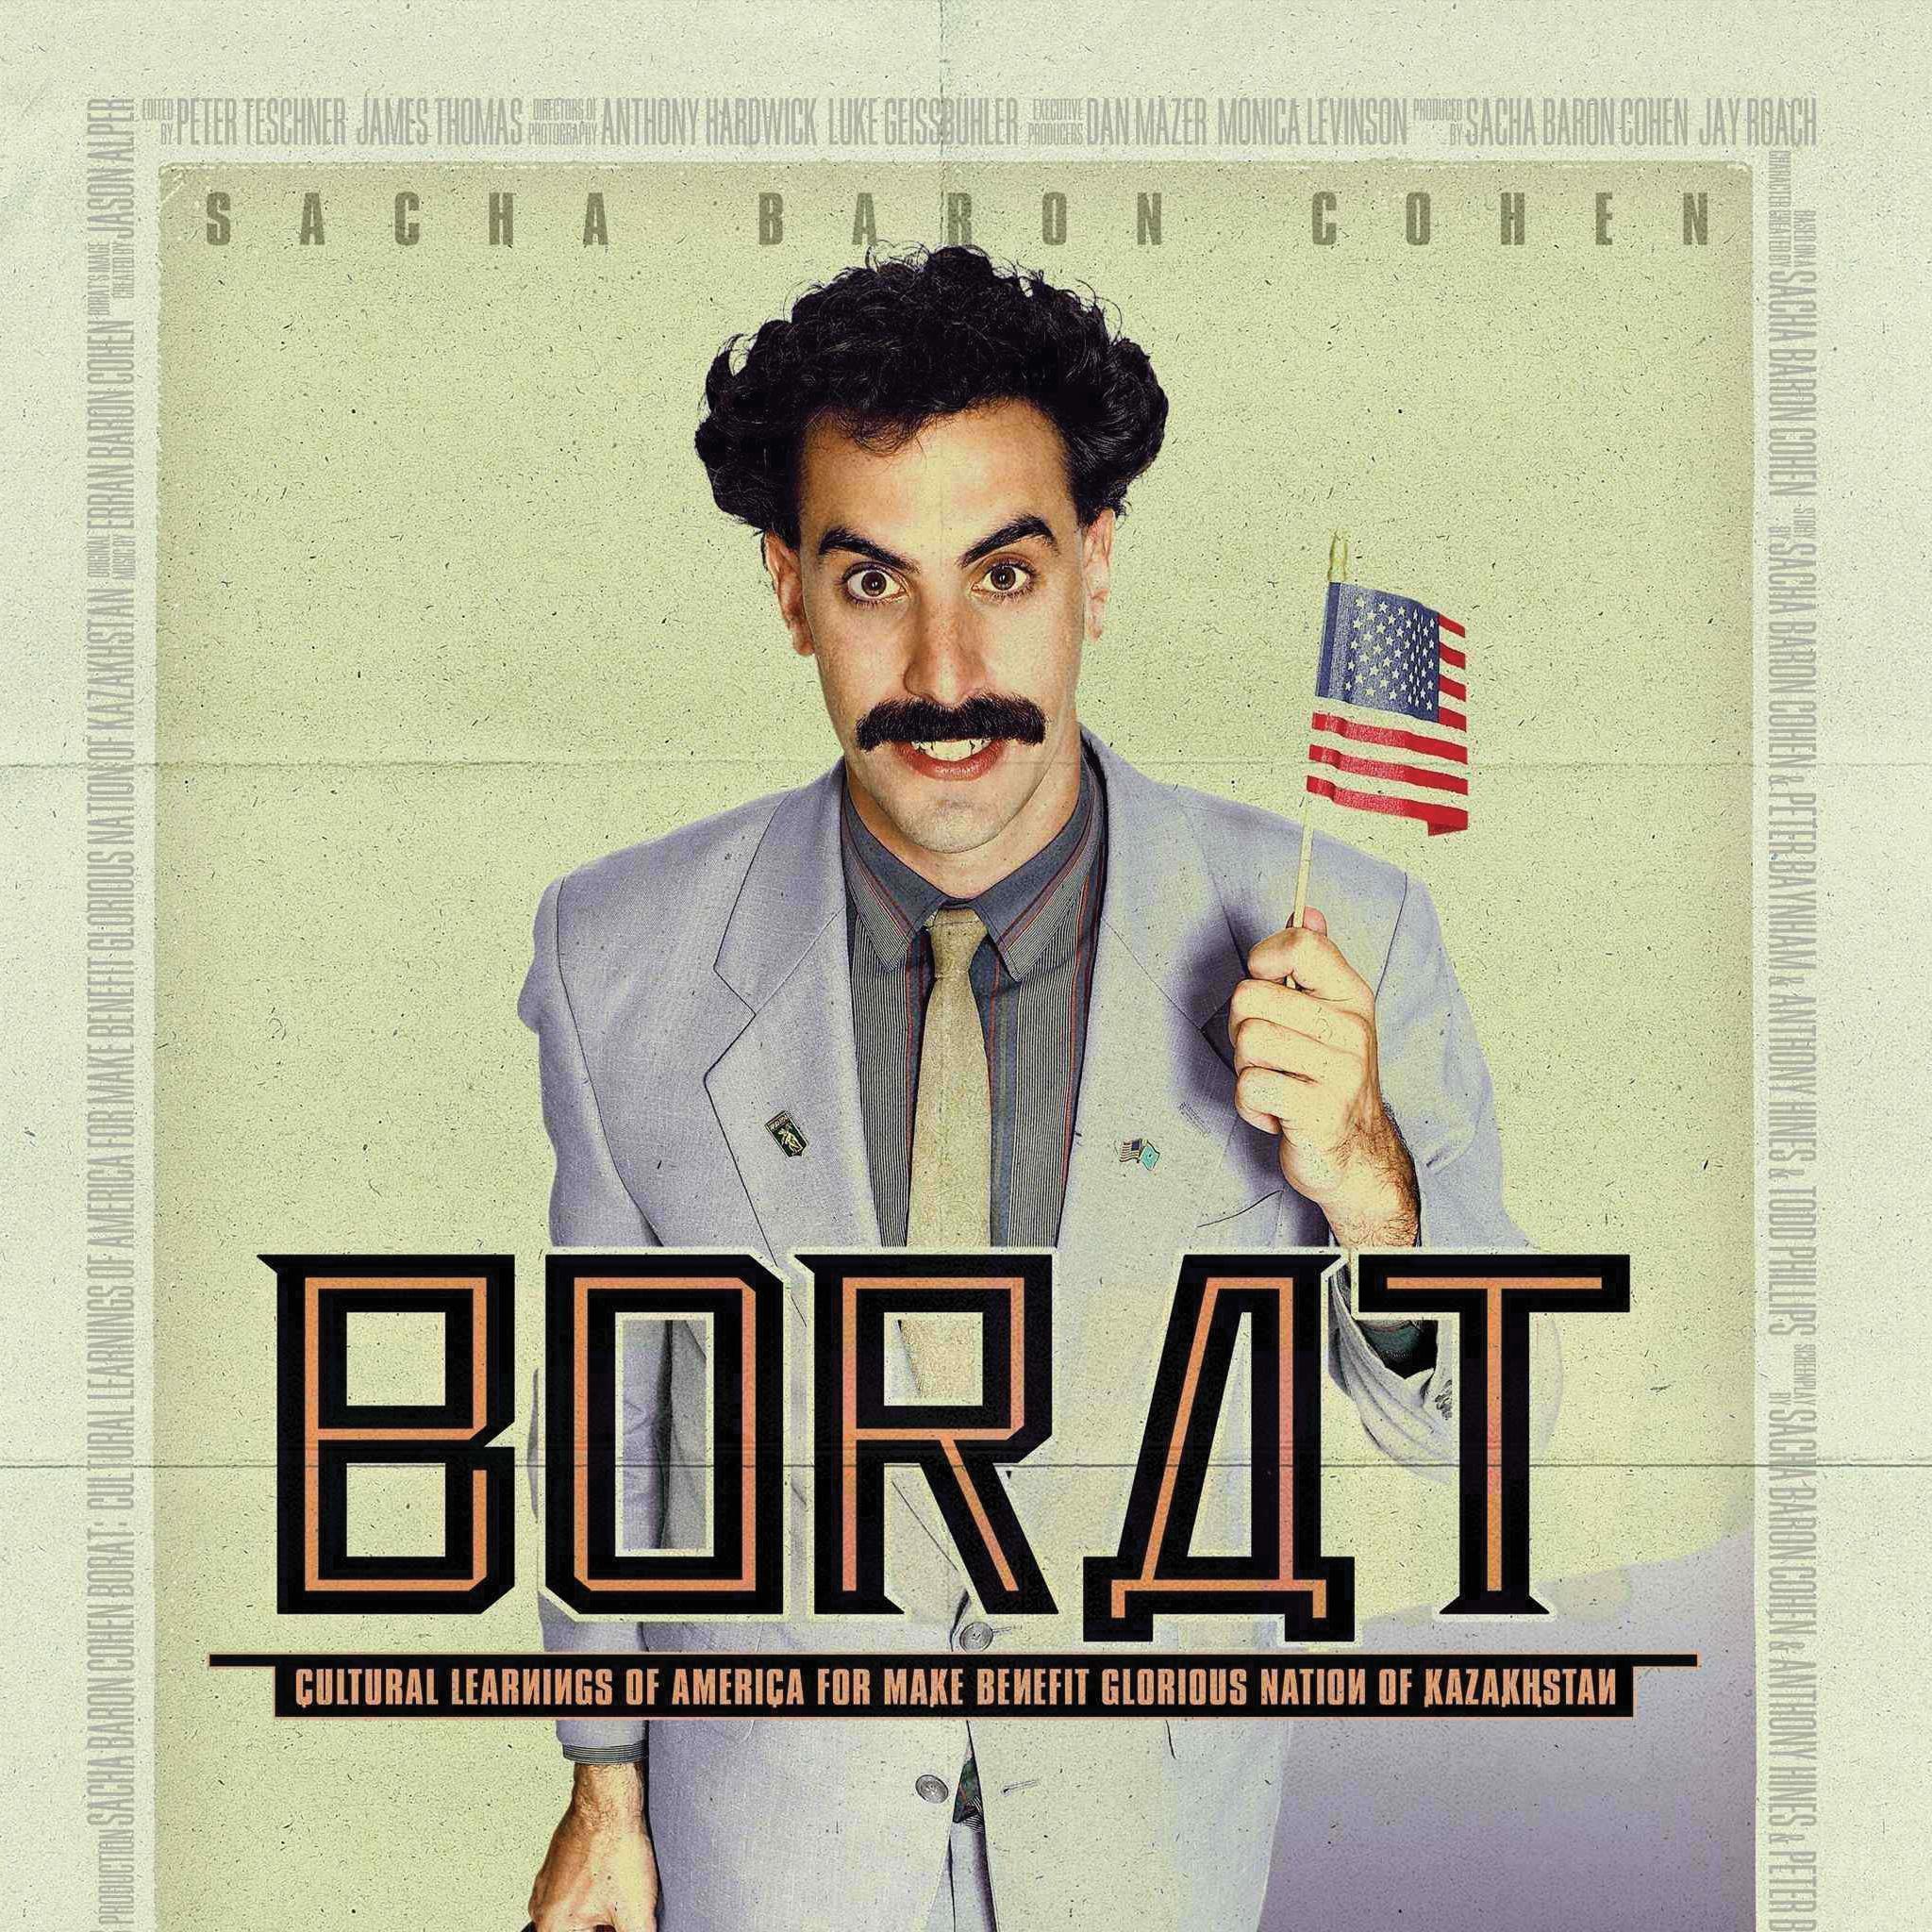 Borat Retina Wallpaper for iPhone X, 6